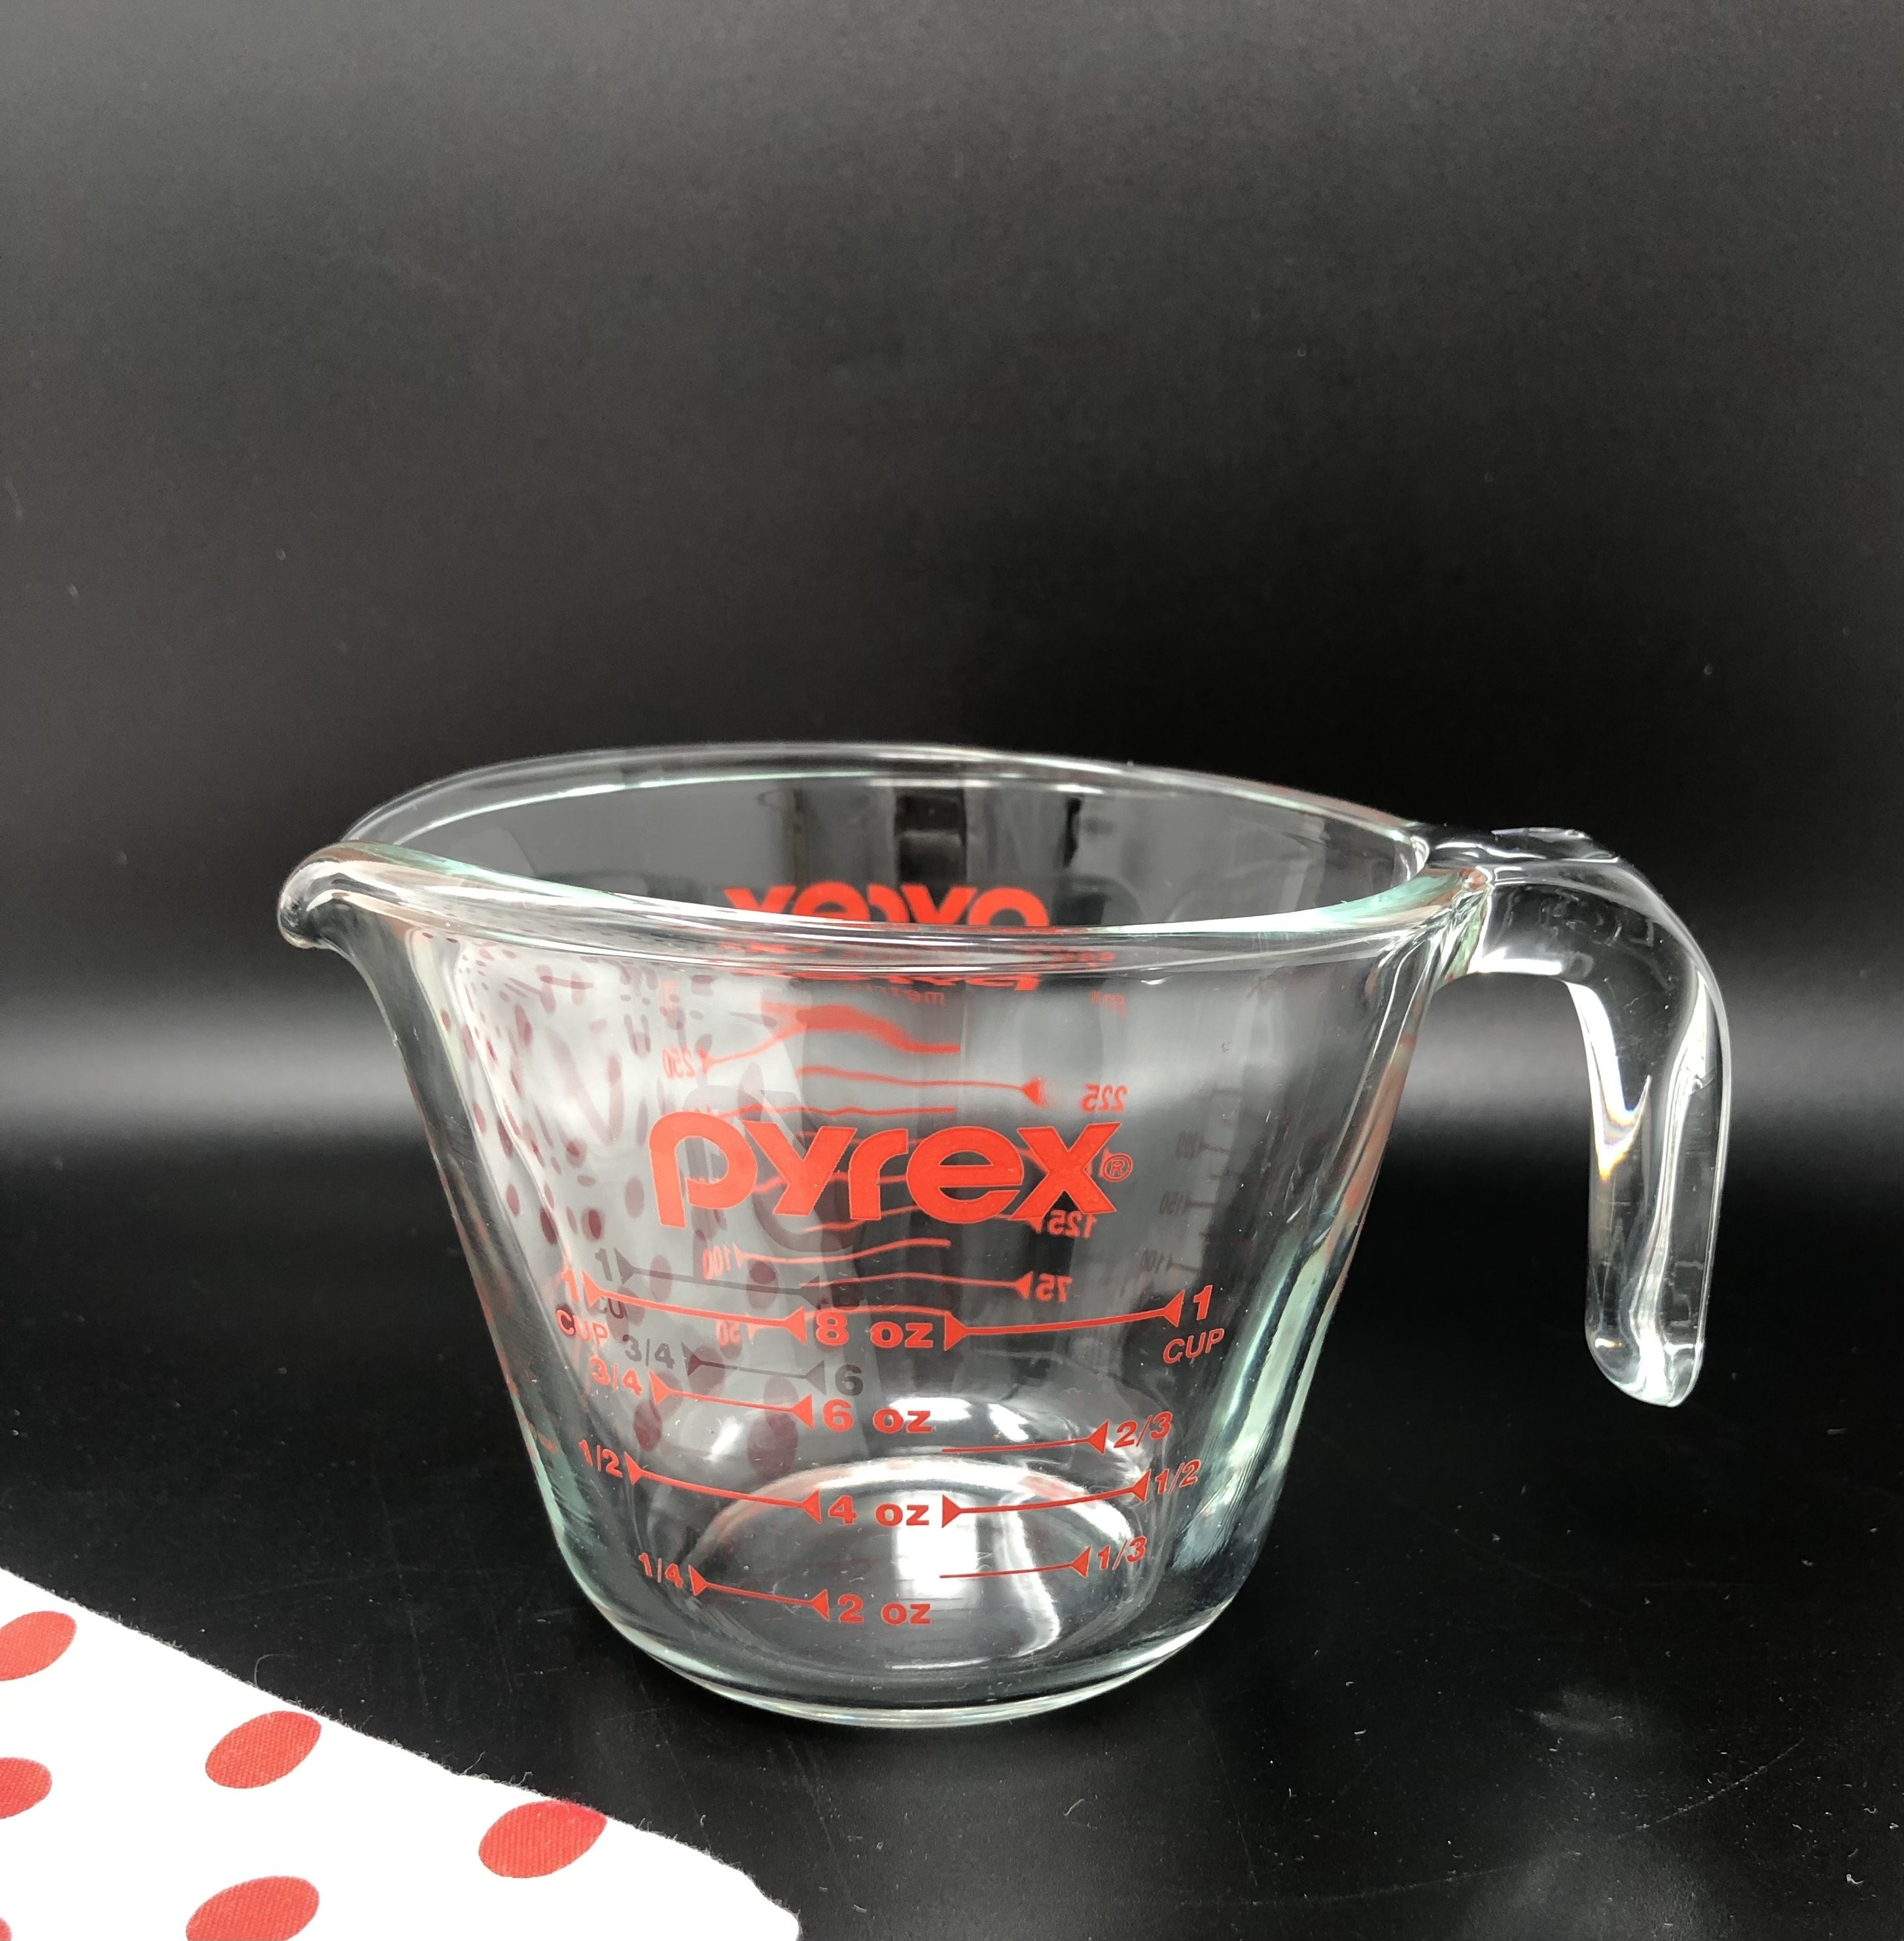 Pyrex Prepware 8-cup Measuring Cup With